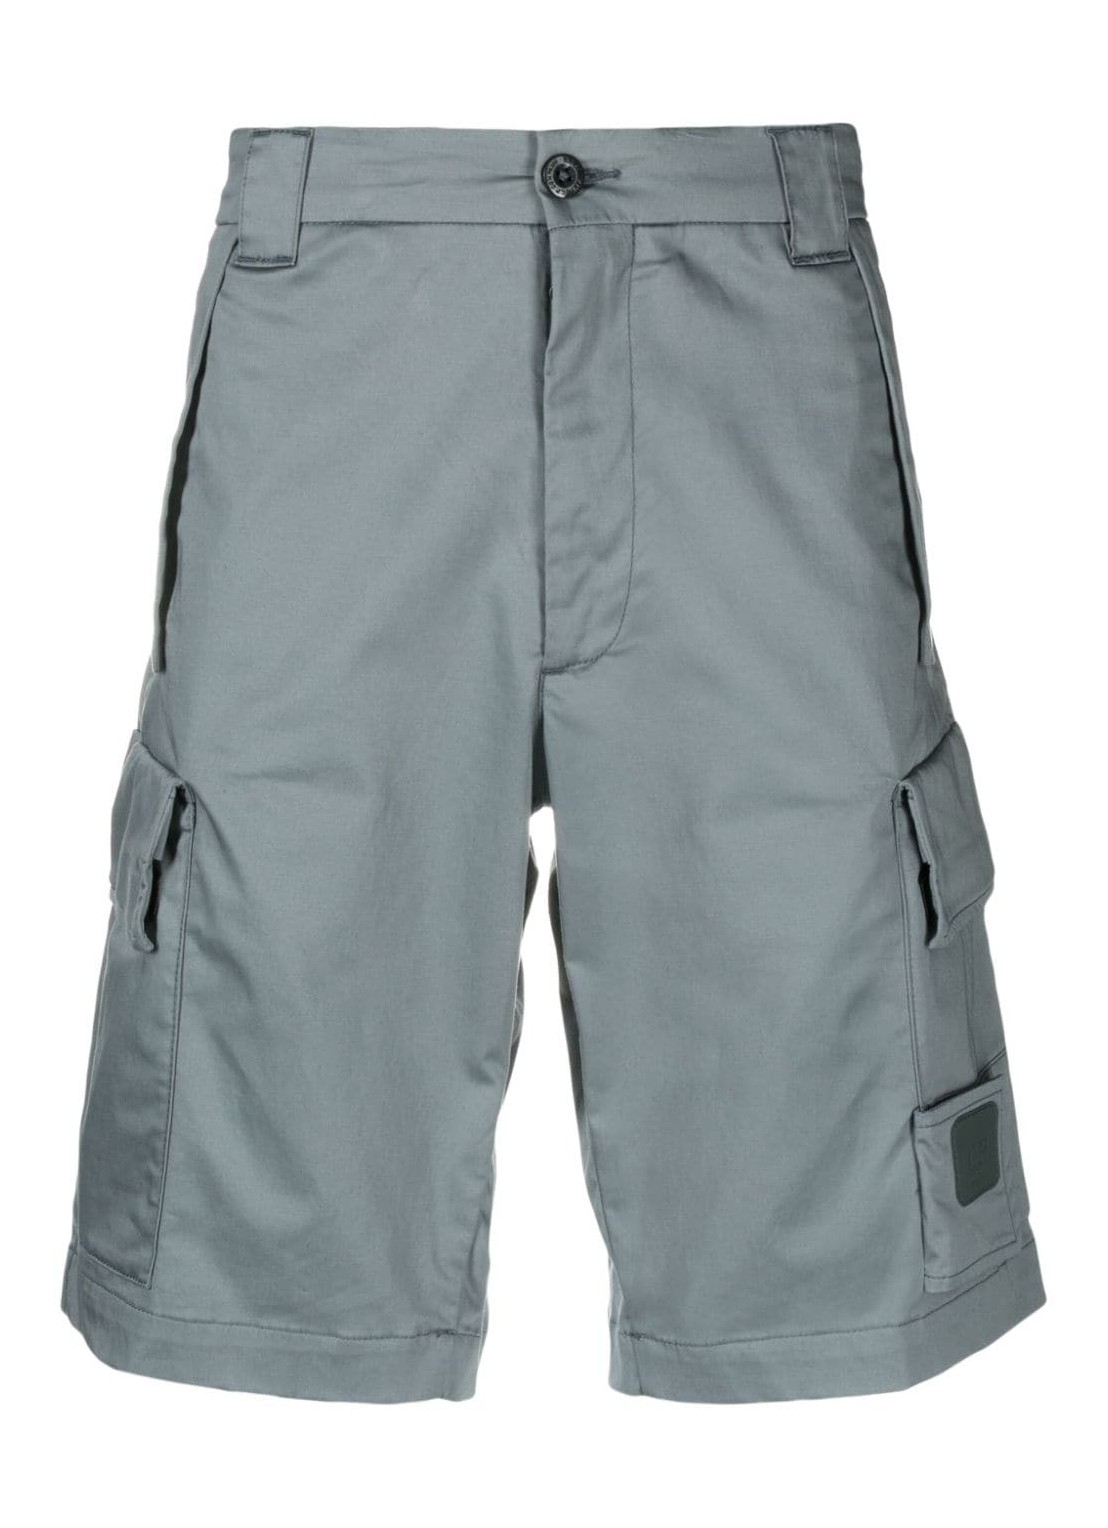 Pantalon corto c.p.company short pant manmetropolis series stretch sateen cargo shorts - 16clbe035a1